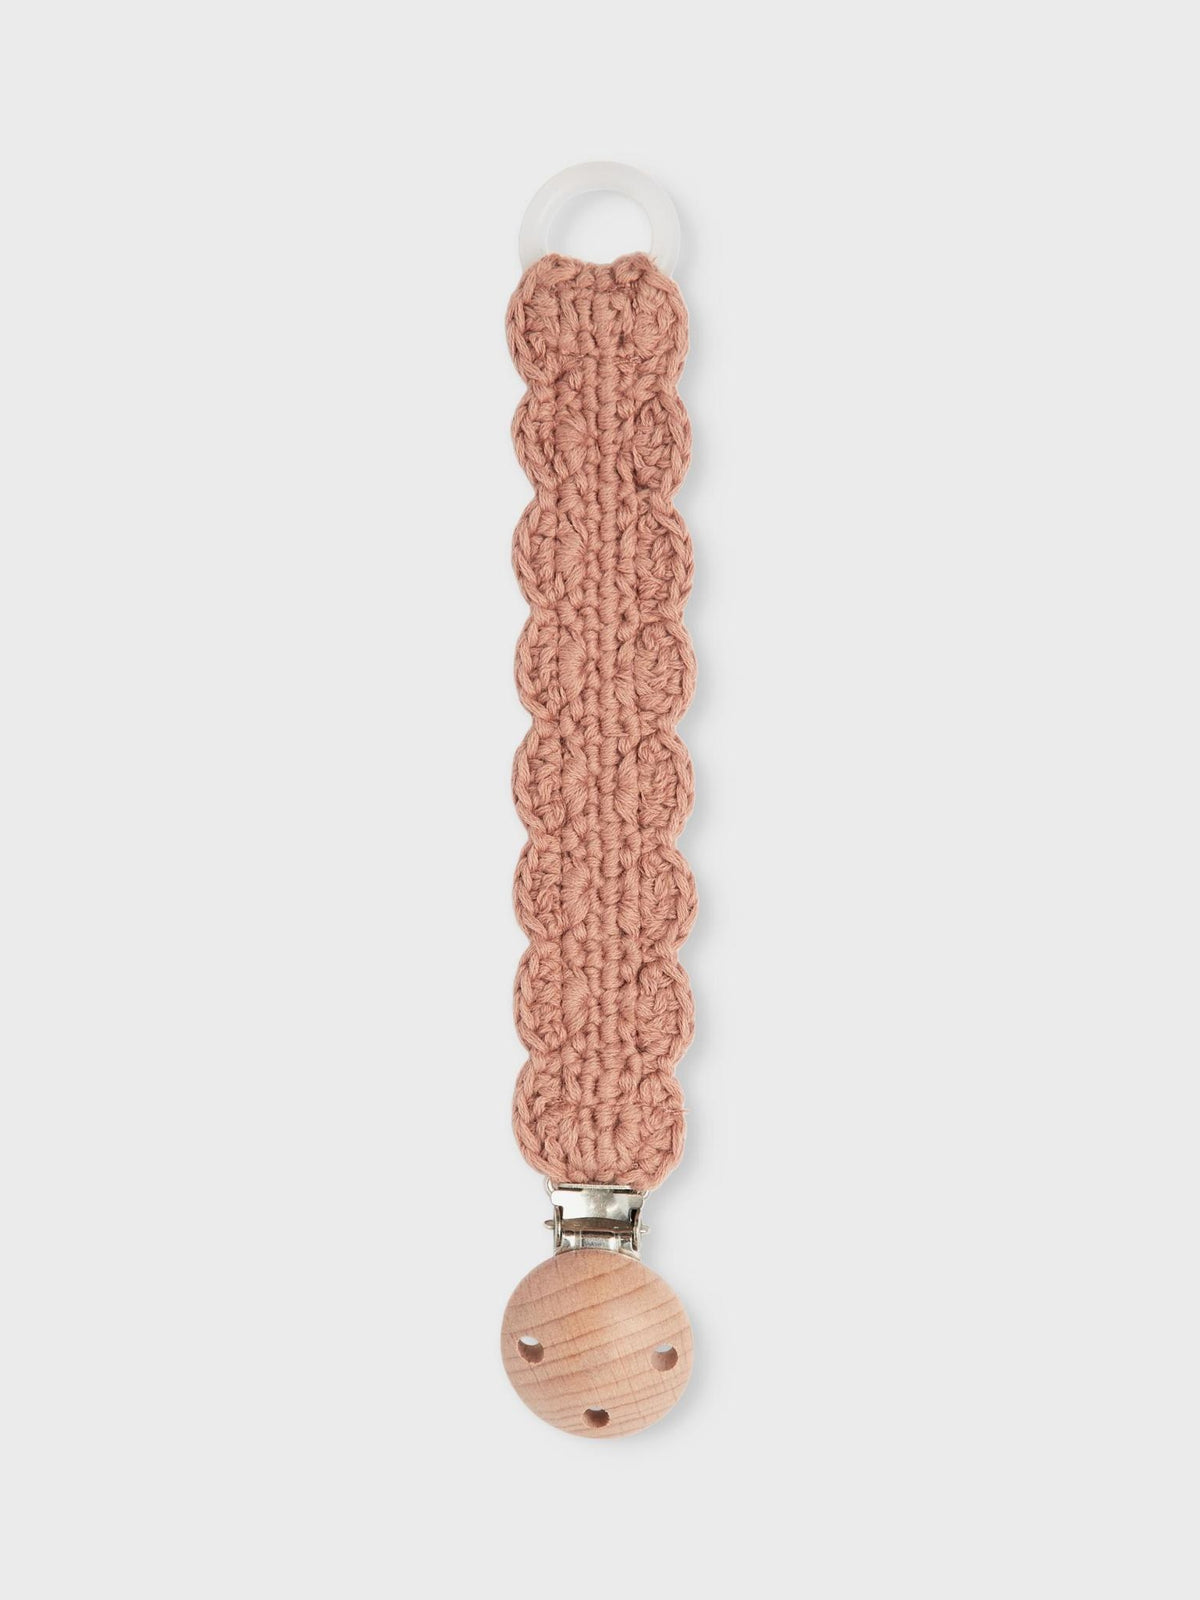 Crochet speenkoord Mocha Mousse, Lill Atelier Hedgehog & Deer